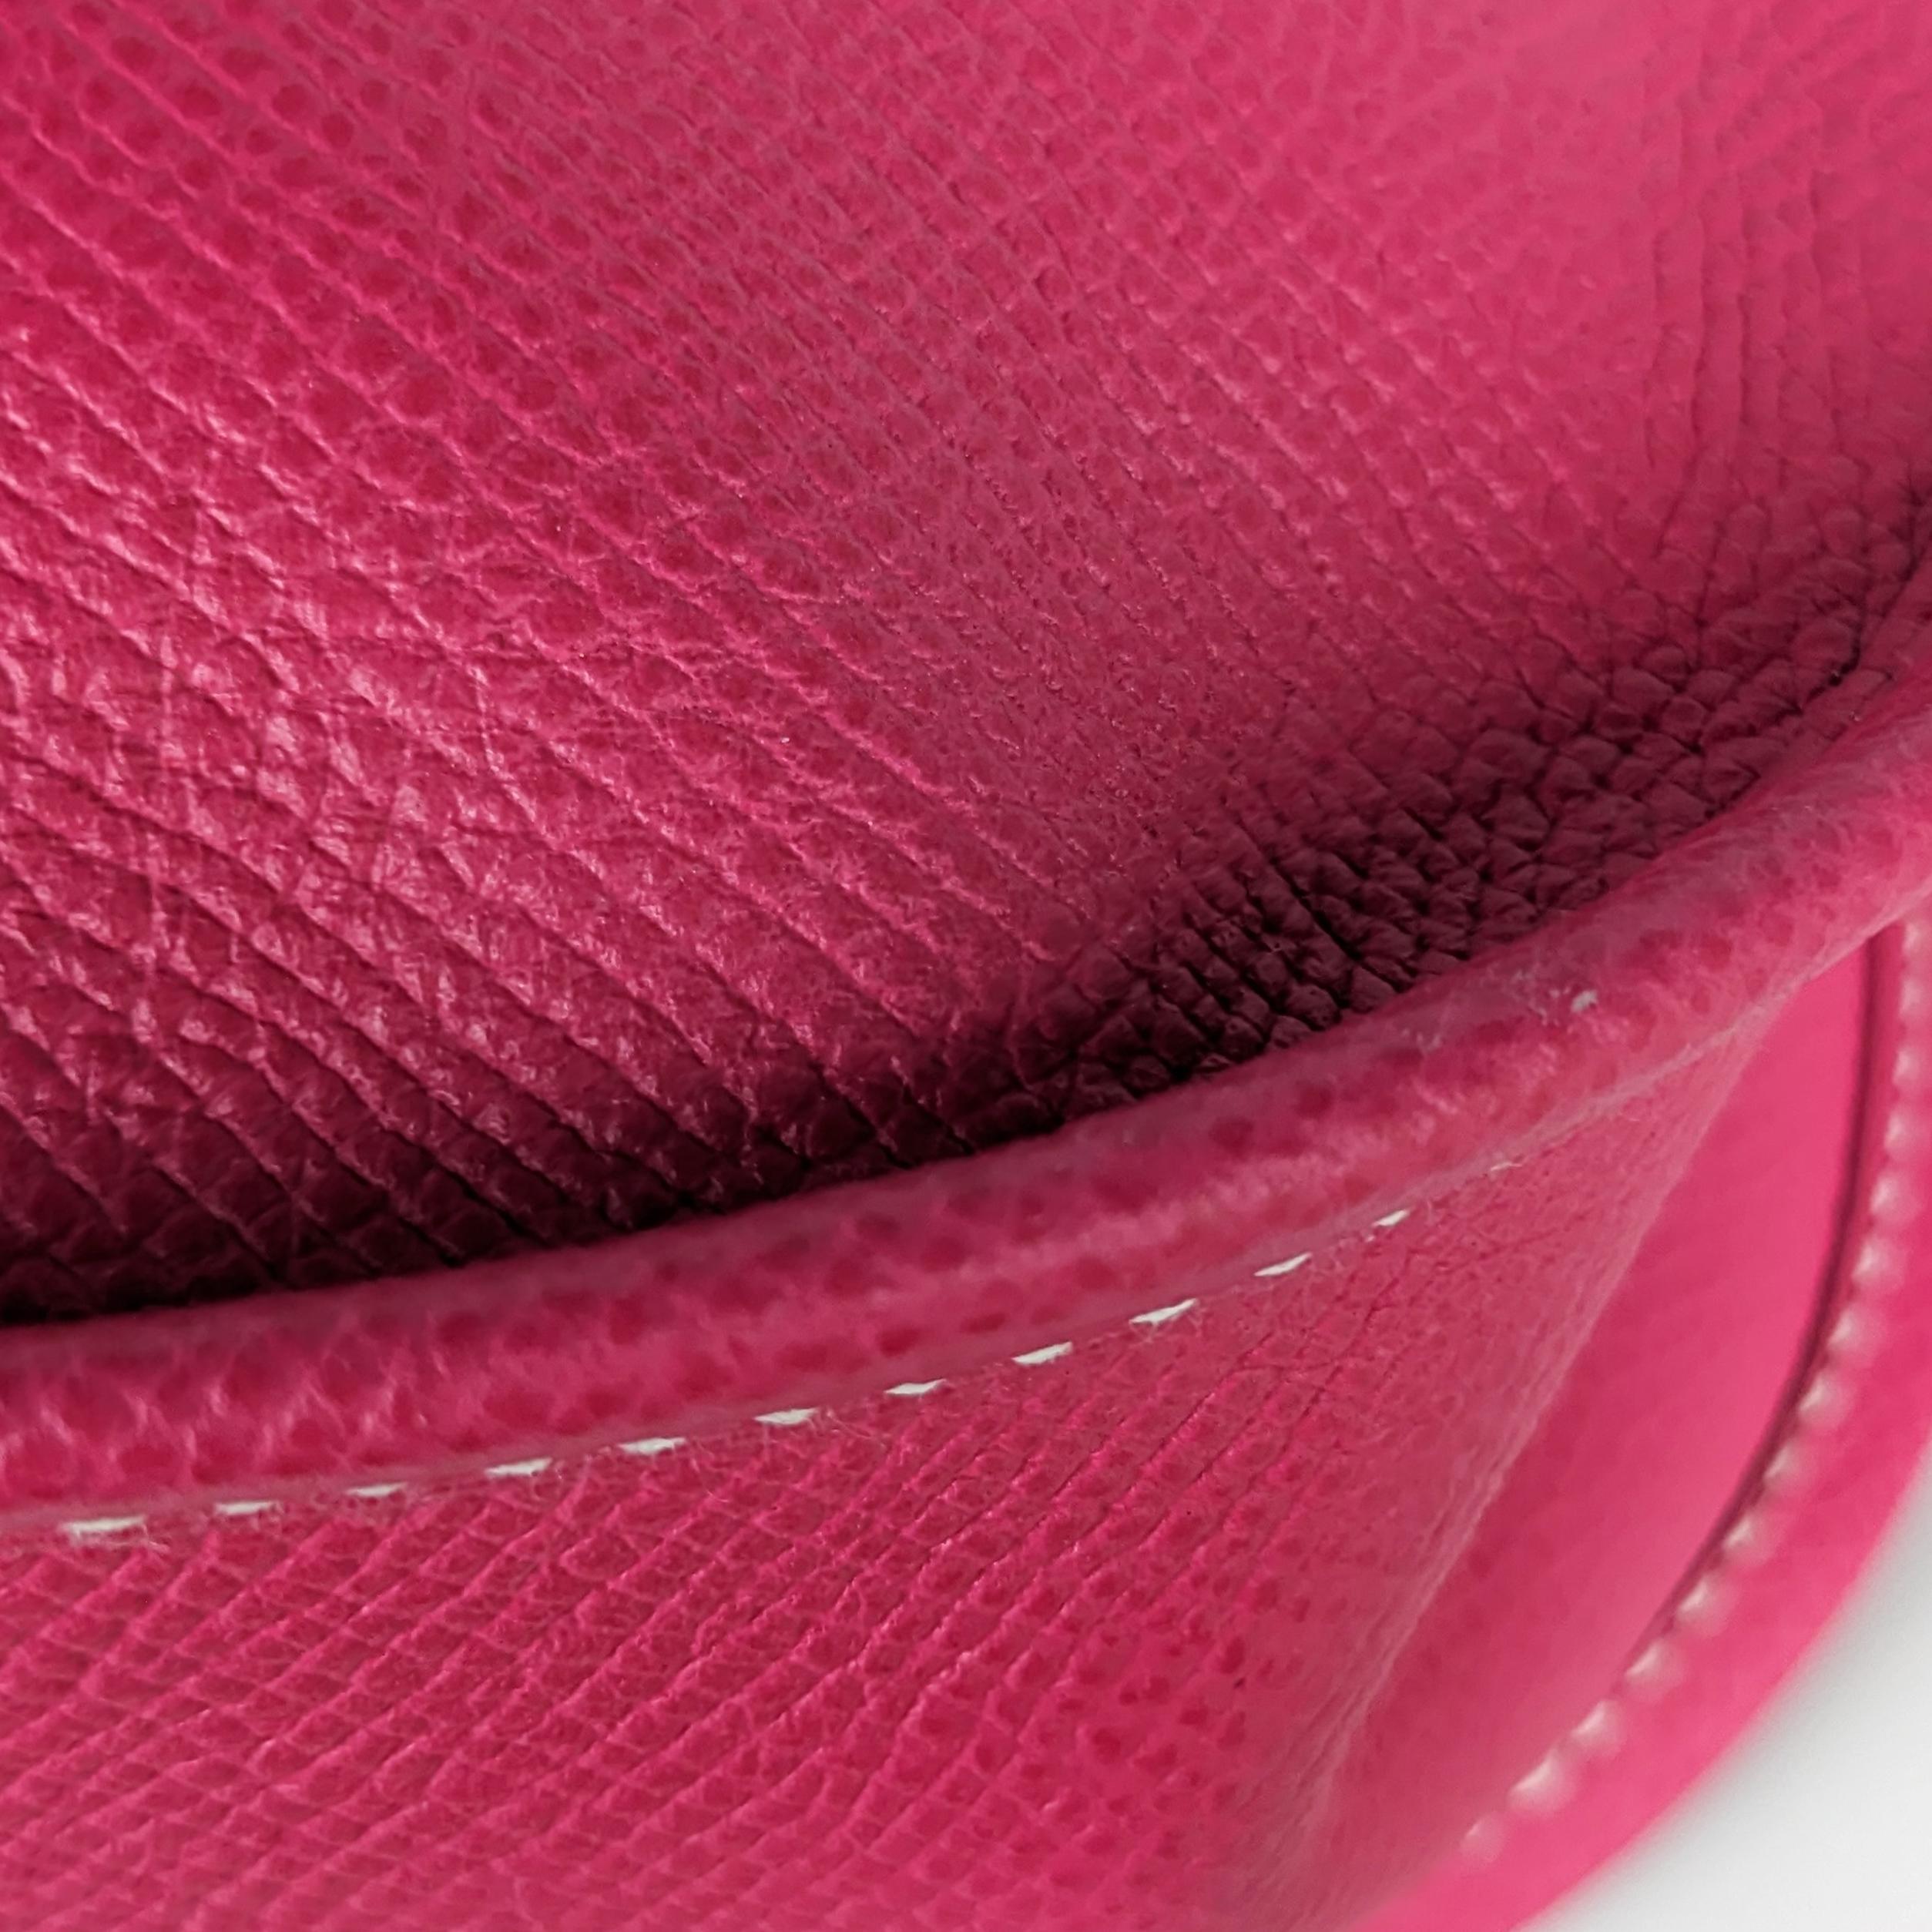 Hermes Evelyne I Pm Epsom Hot Pink Leather Crossbody Bag 2